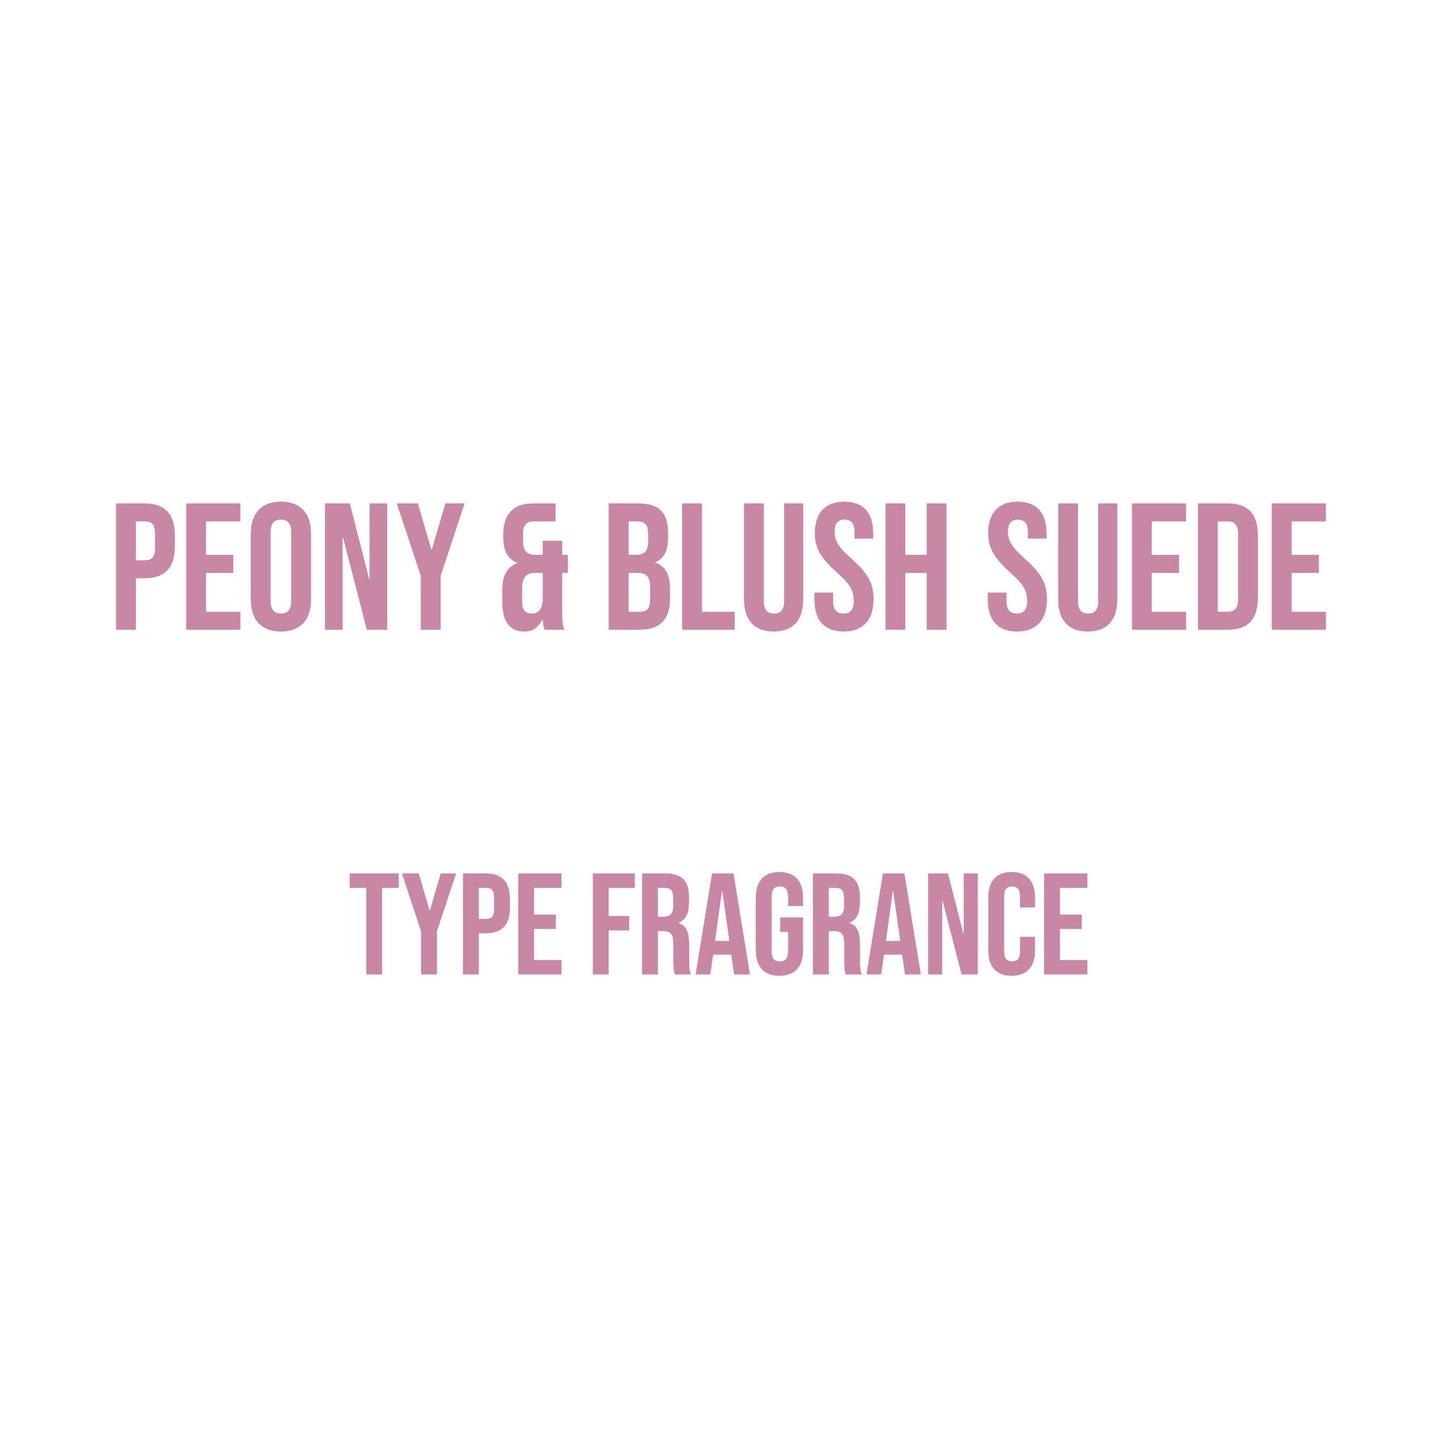 Peony & Blush Suede Type Fragrance